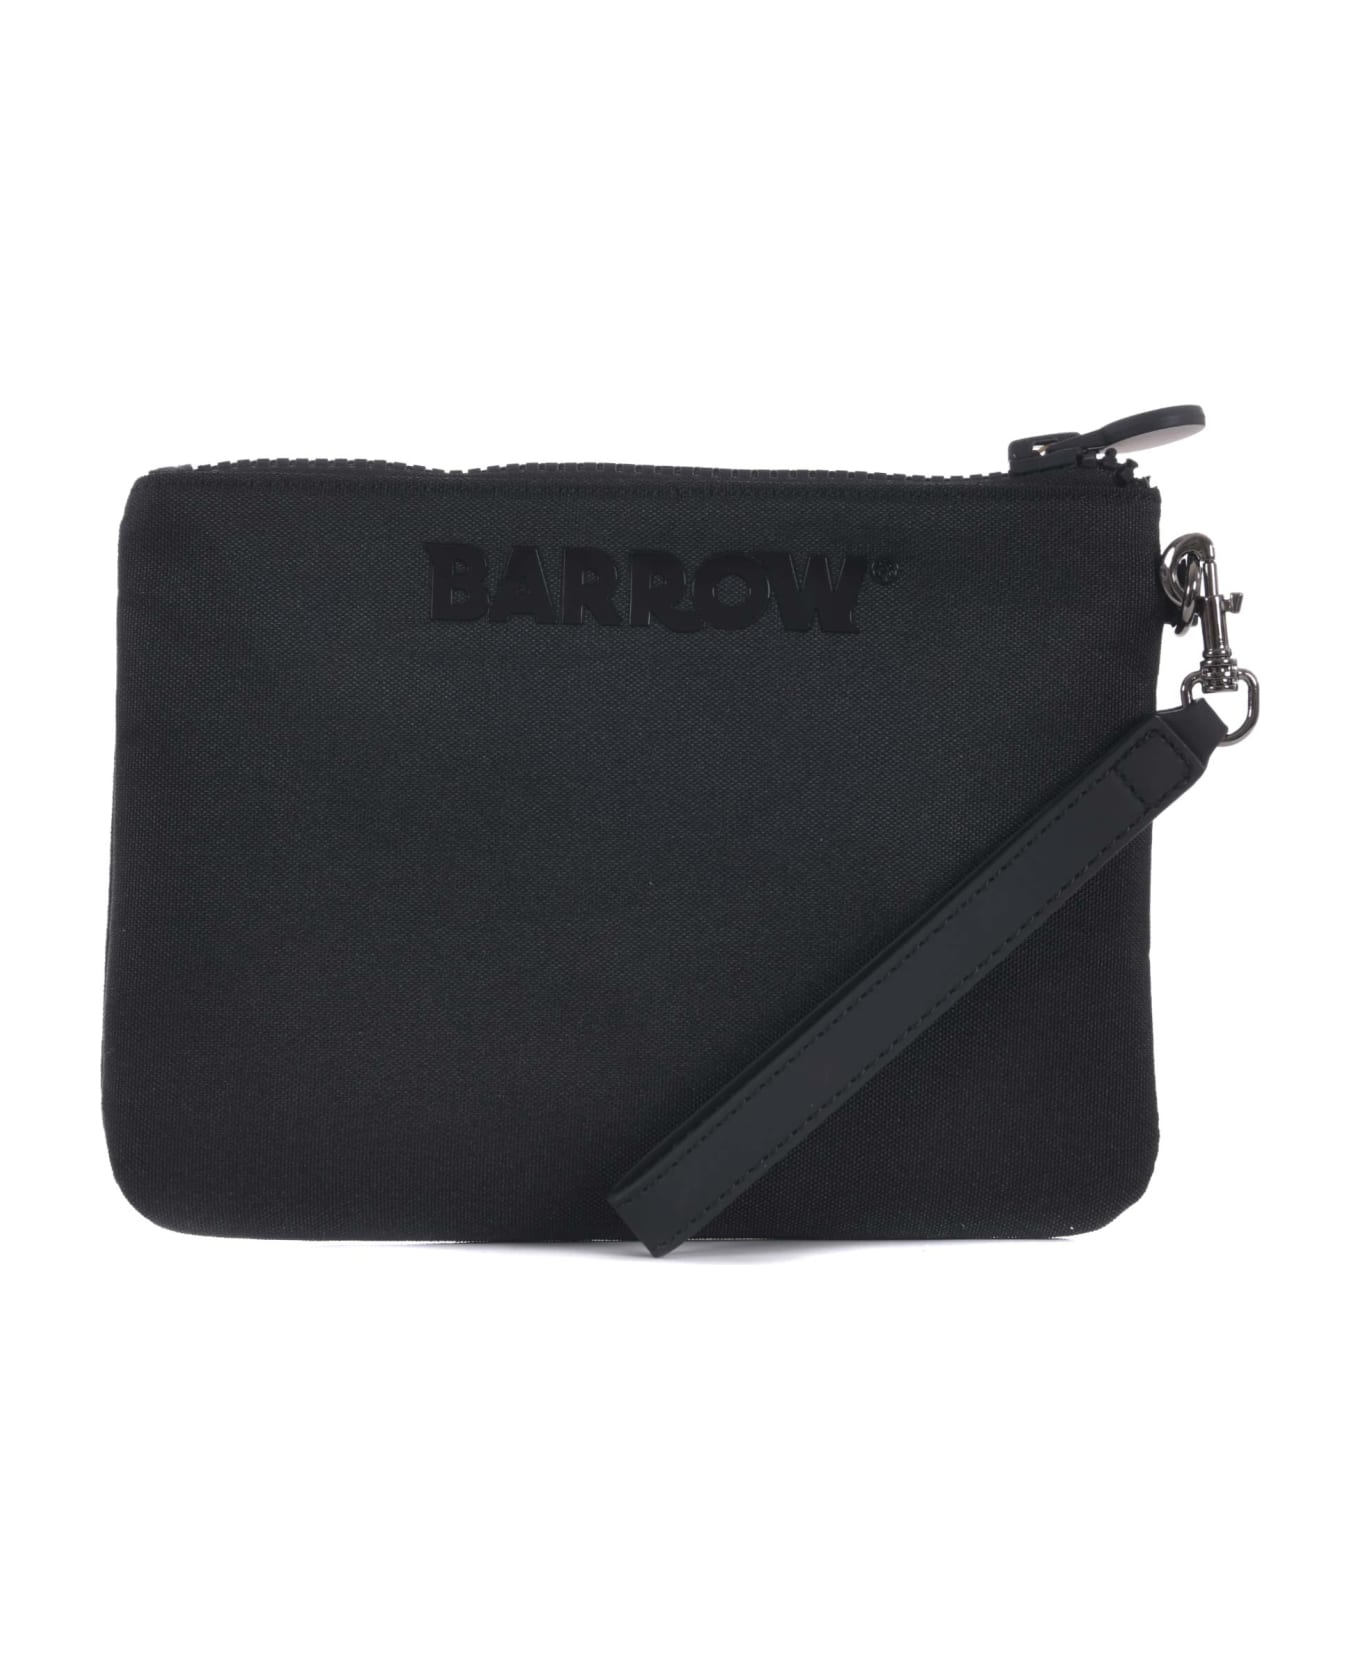 Barrow Clutch Bag - Nero/giallo fluo トラベルバッグ